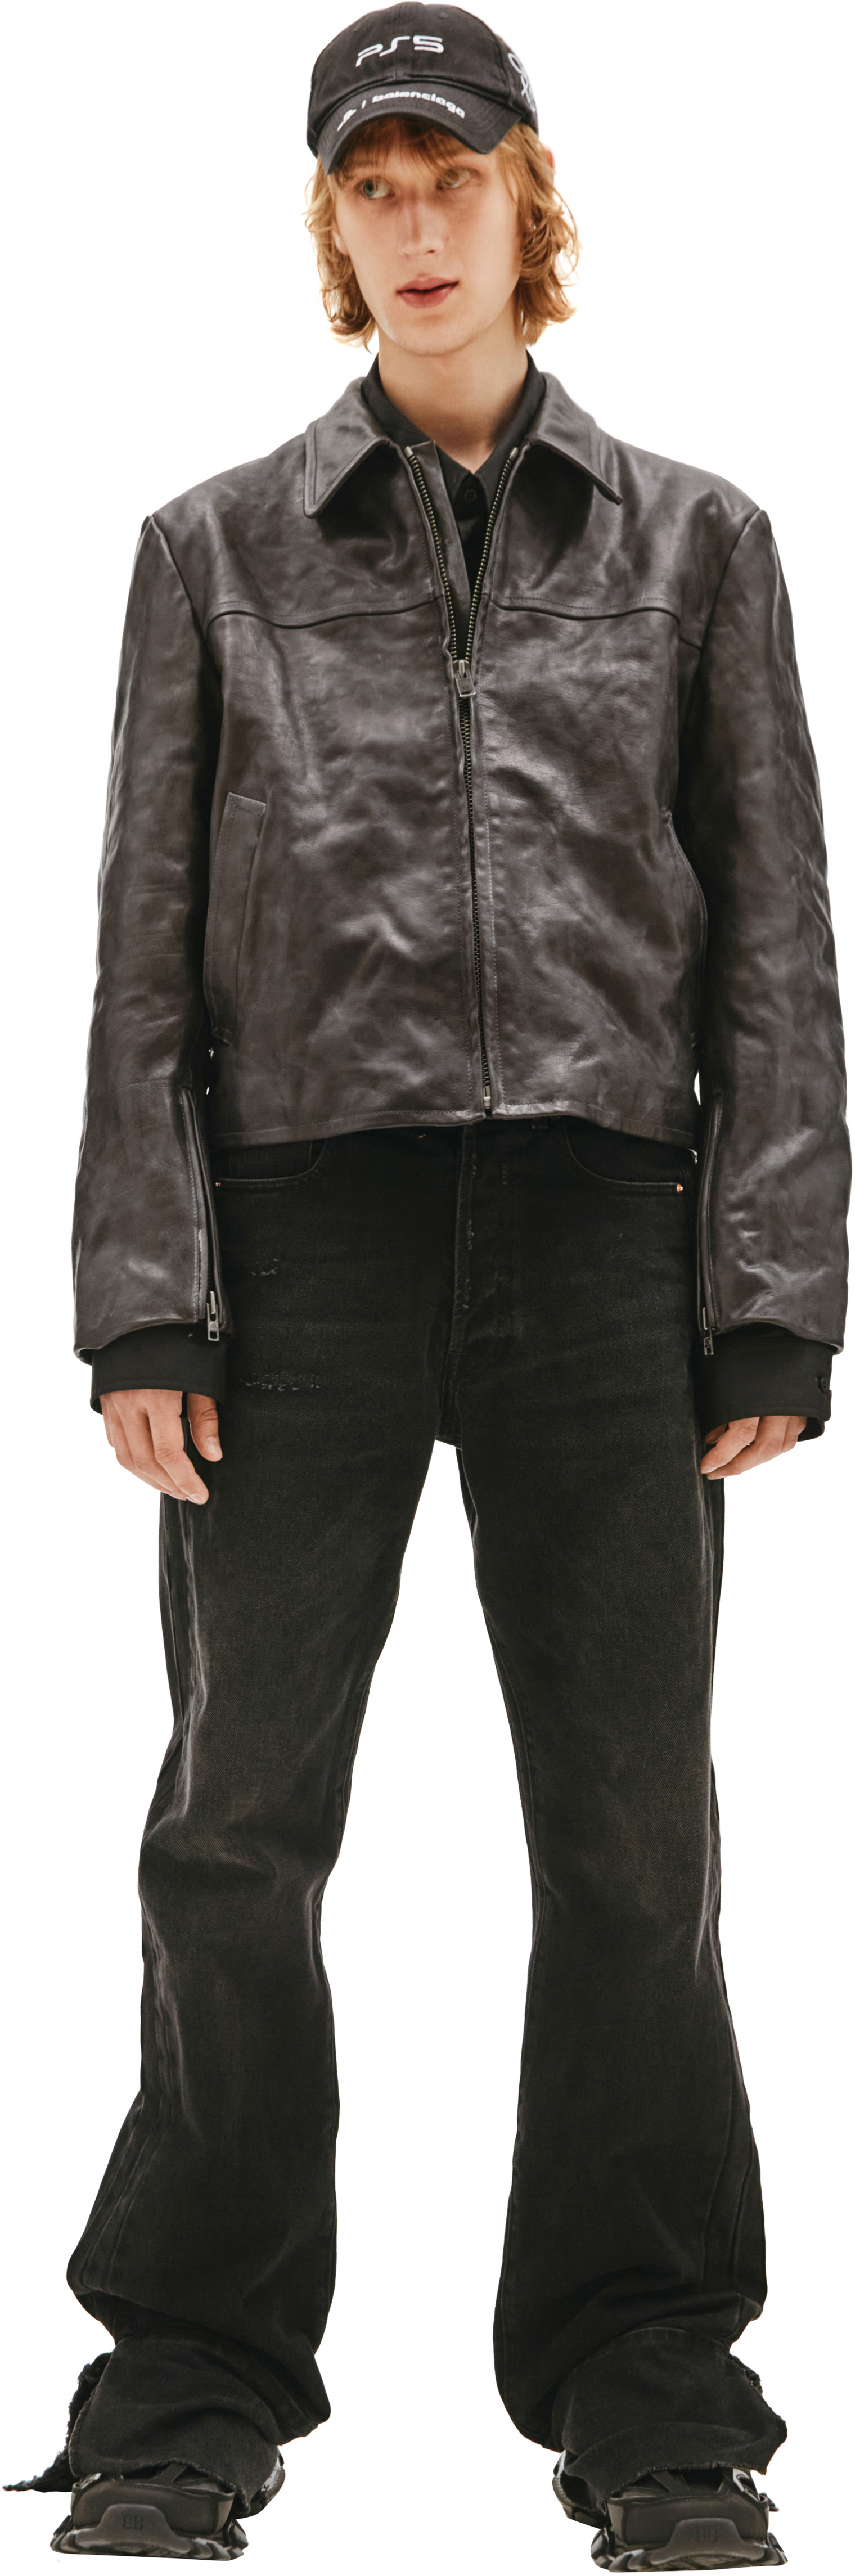 Balenciaga Black Leather Jacket